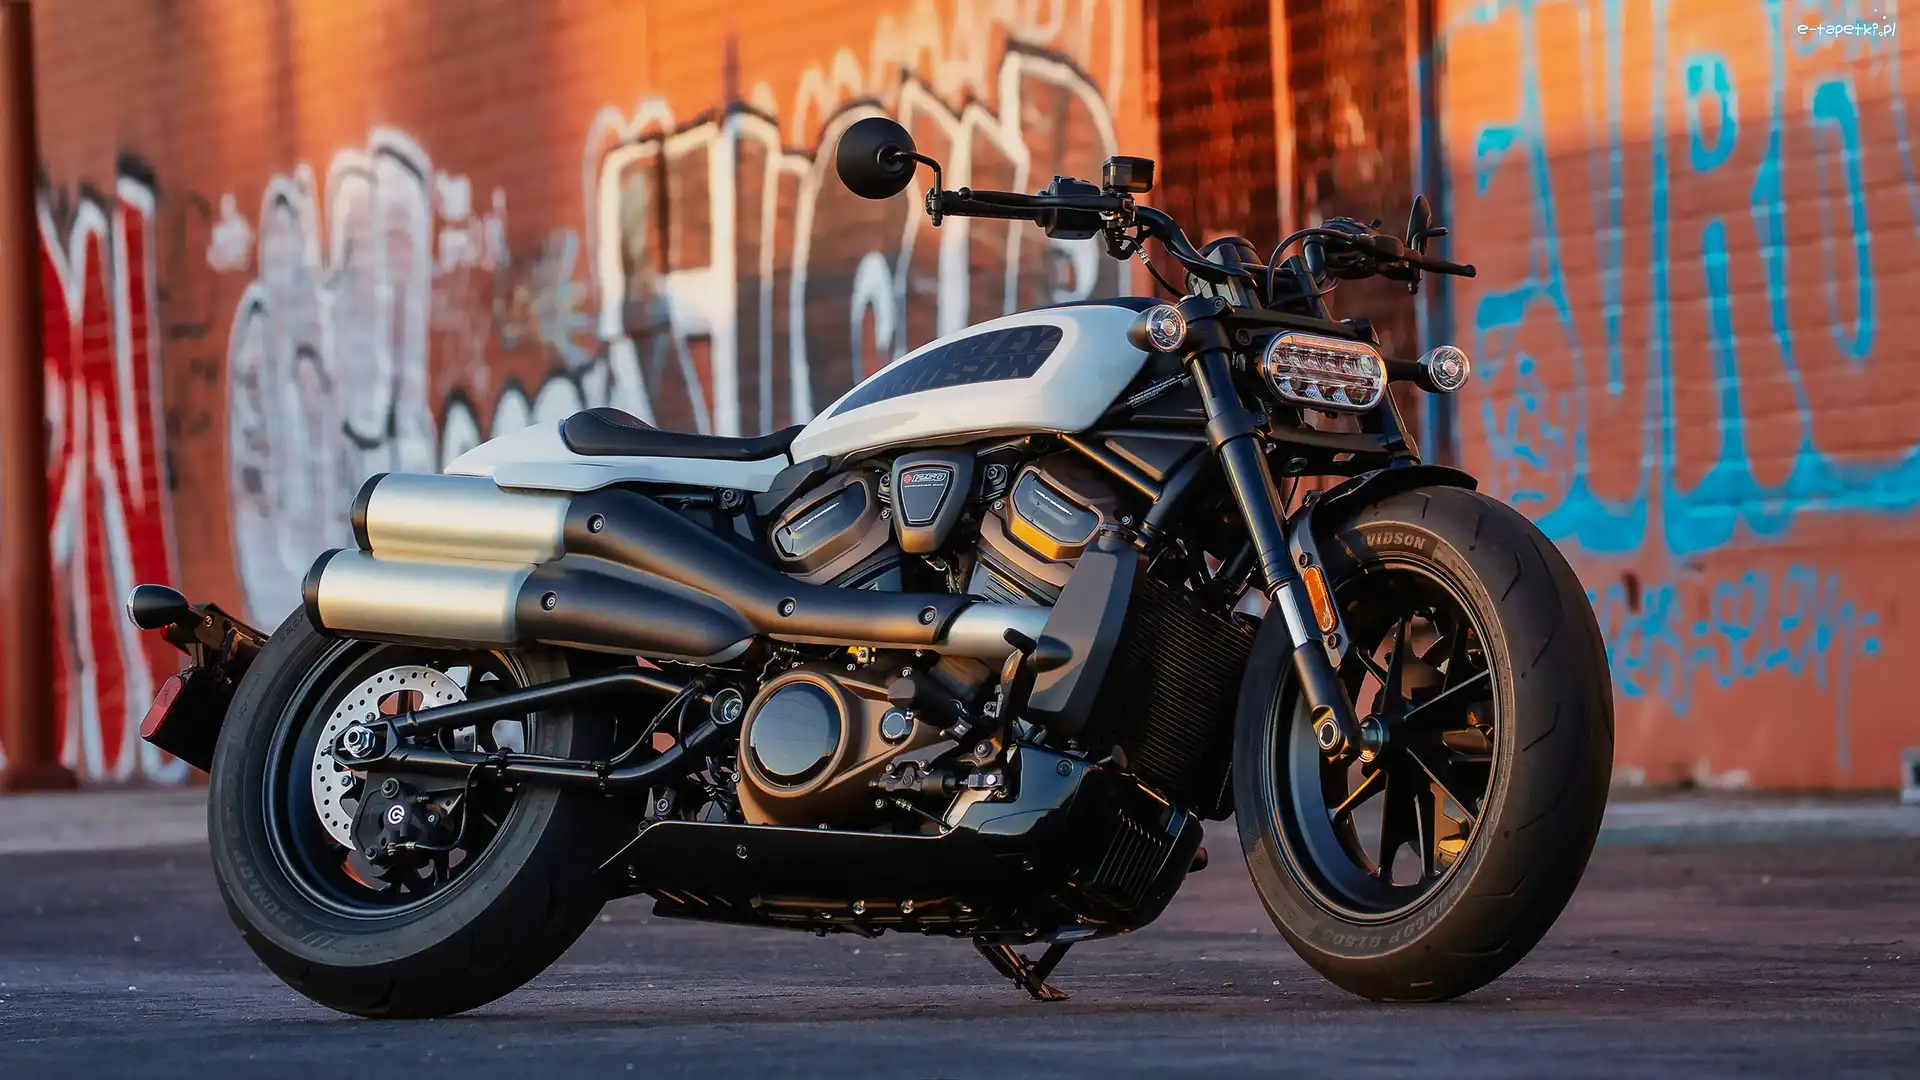 Motocykl, Ulica, Harley-Davidson Sportster S, Graffiti, Mur